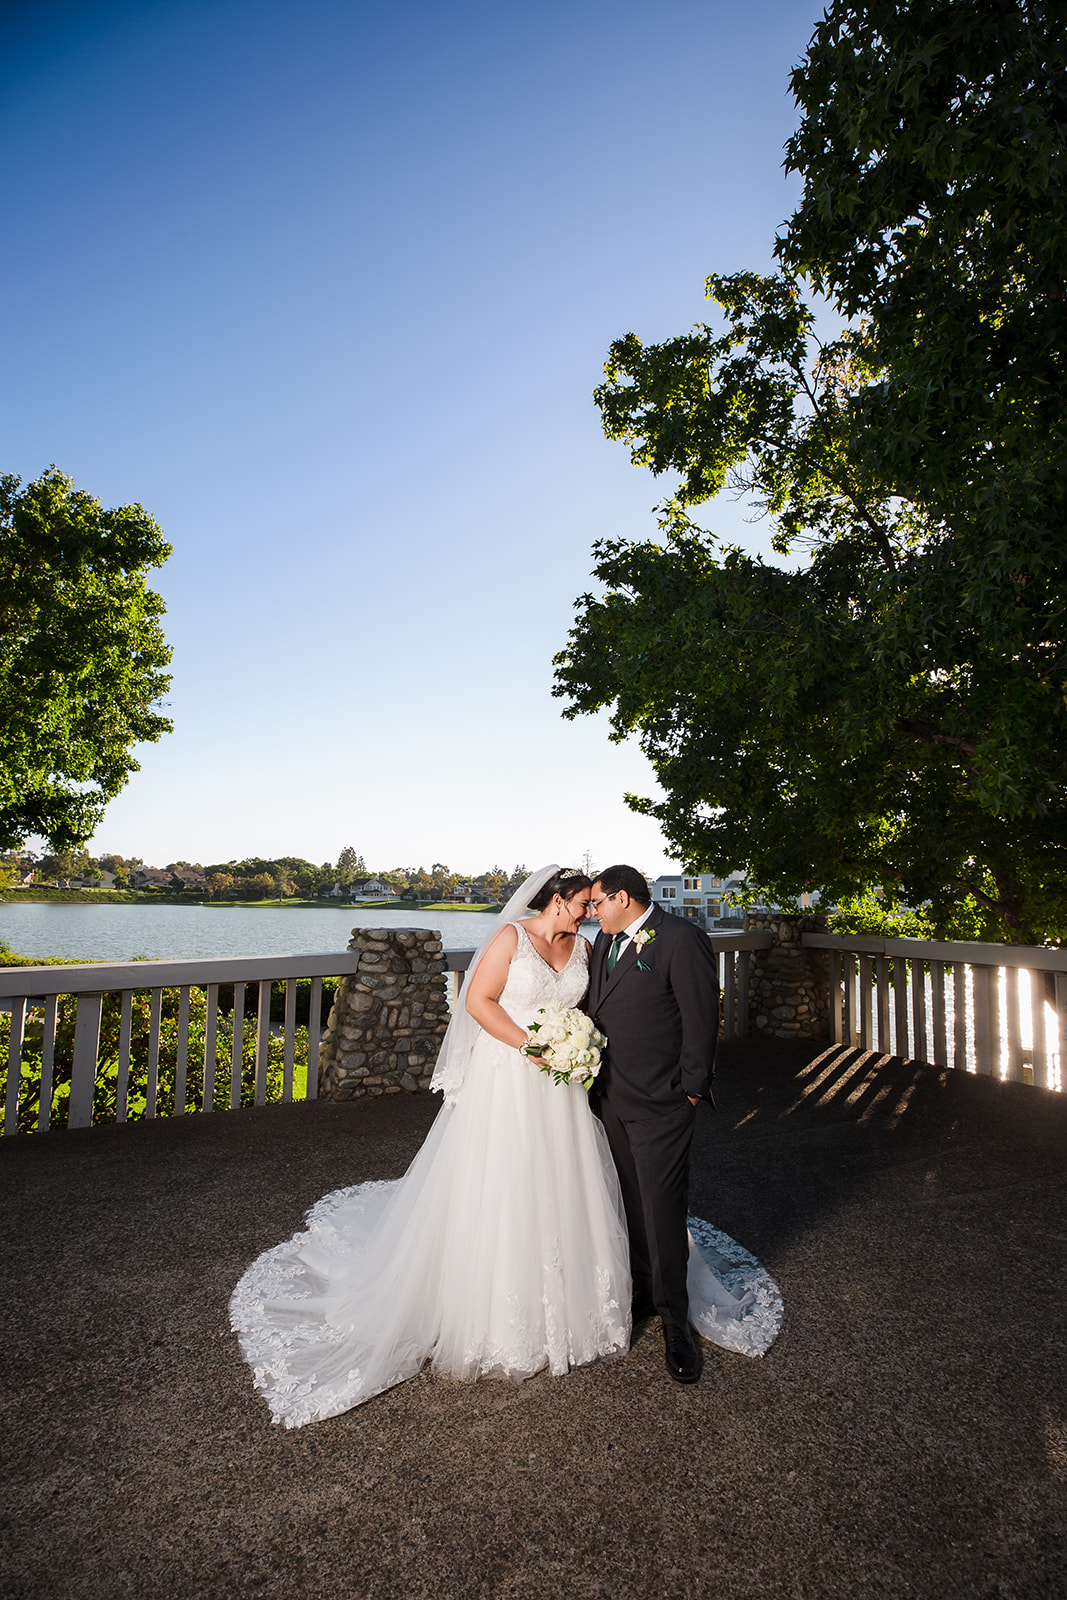 Bride and groom wedding portrait overlooking a lake in Irvine, CA